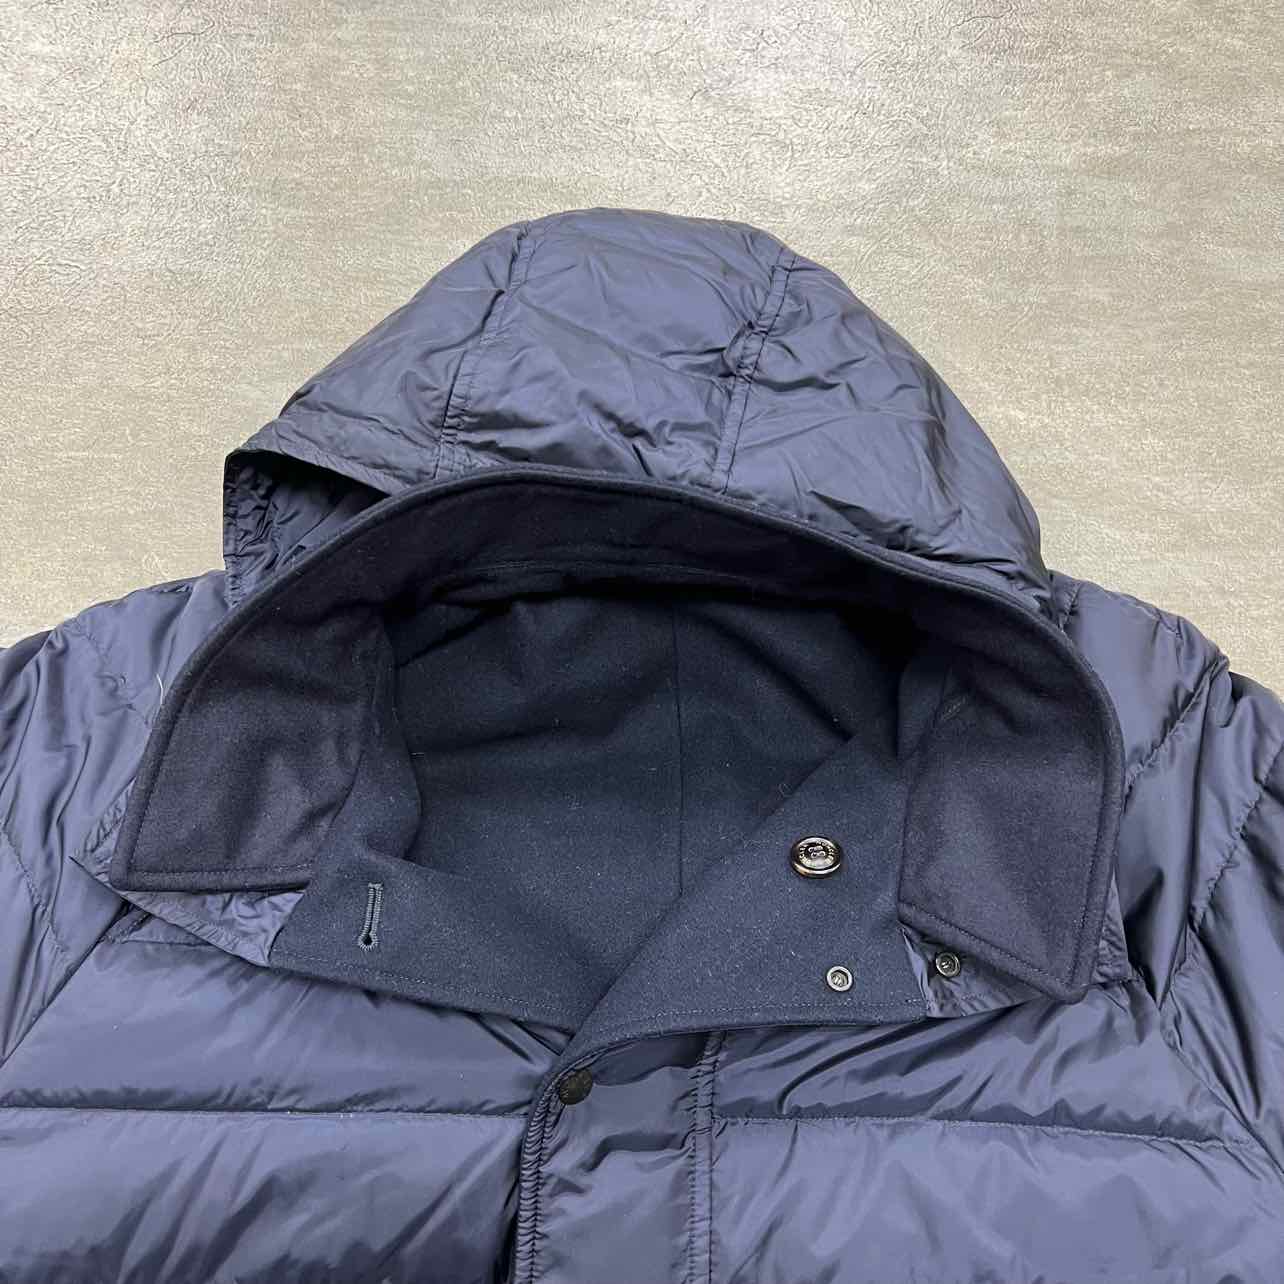 Moncler Jacket "TILLEUL GIUBBOTTO" Navy Used Size 6